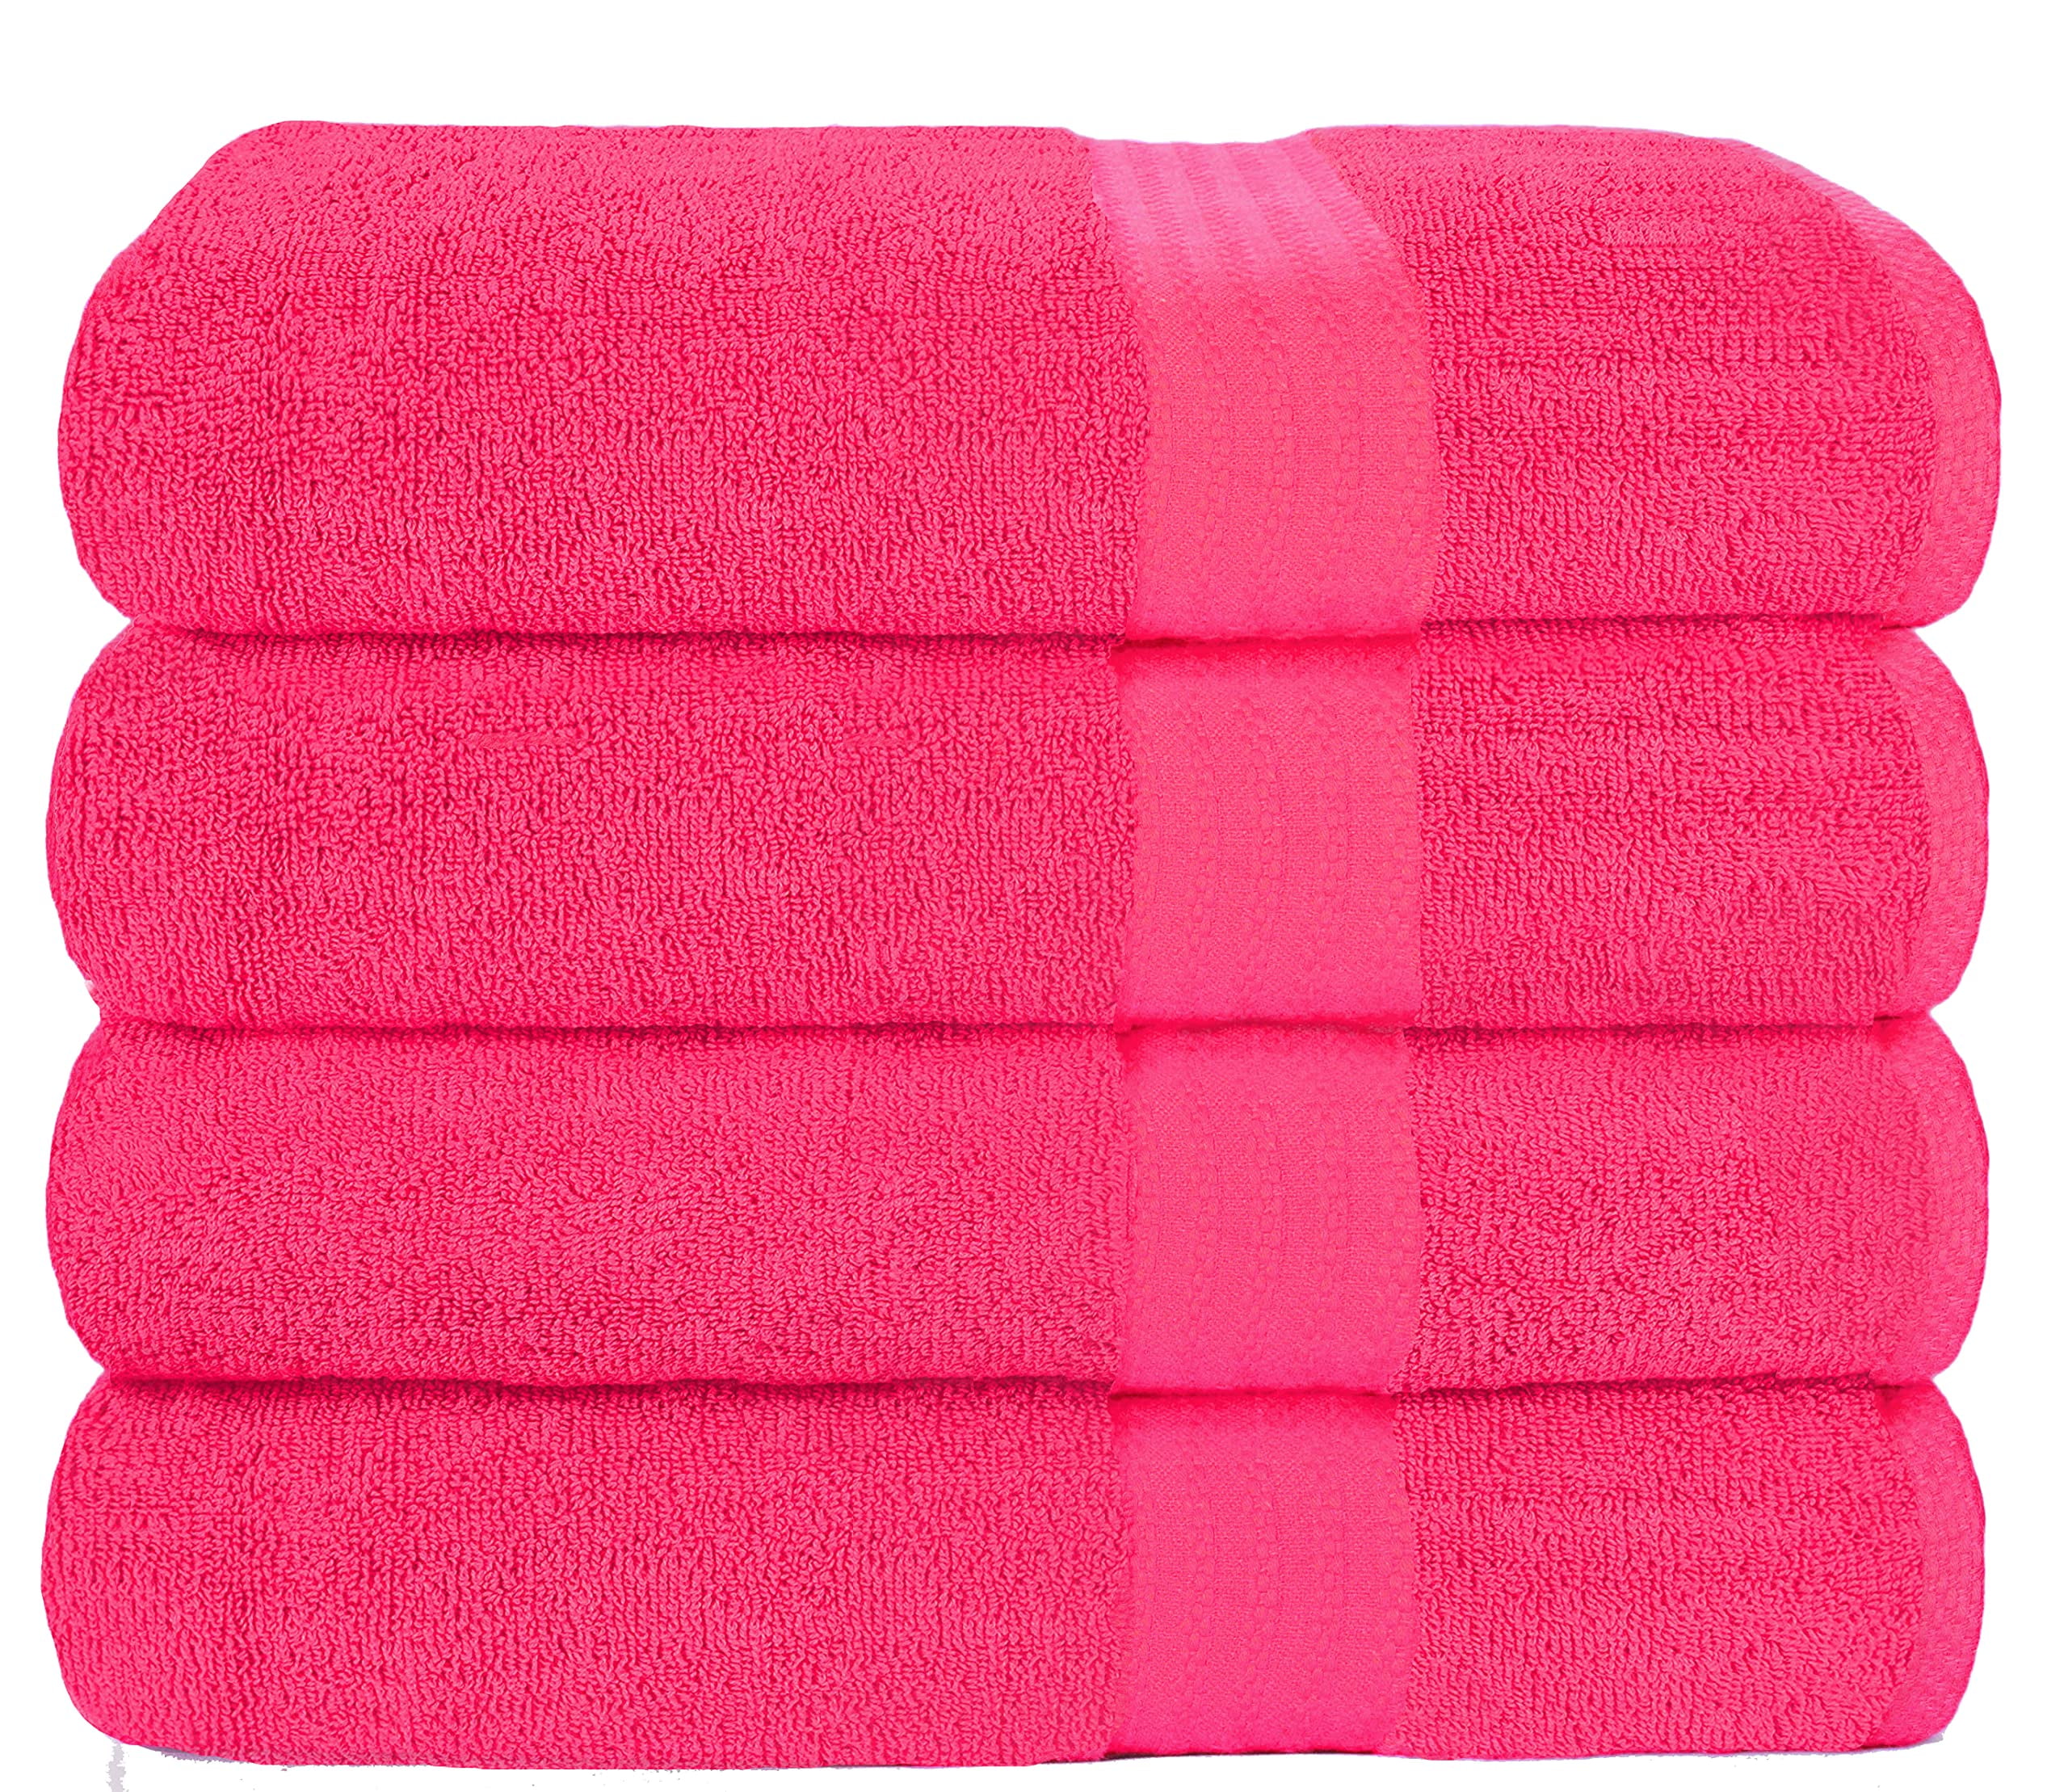 ECO TOWELS 100% Cotton Bath Towels - Cotton Towels for Bathroom - Set of 4  Bath Towel - Shower towels, Highly Absorbent Bath Towel 27”x54”